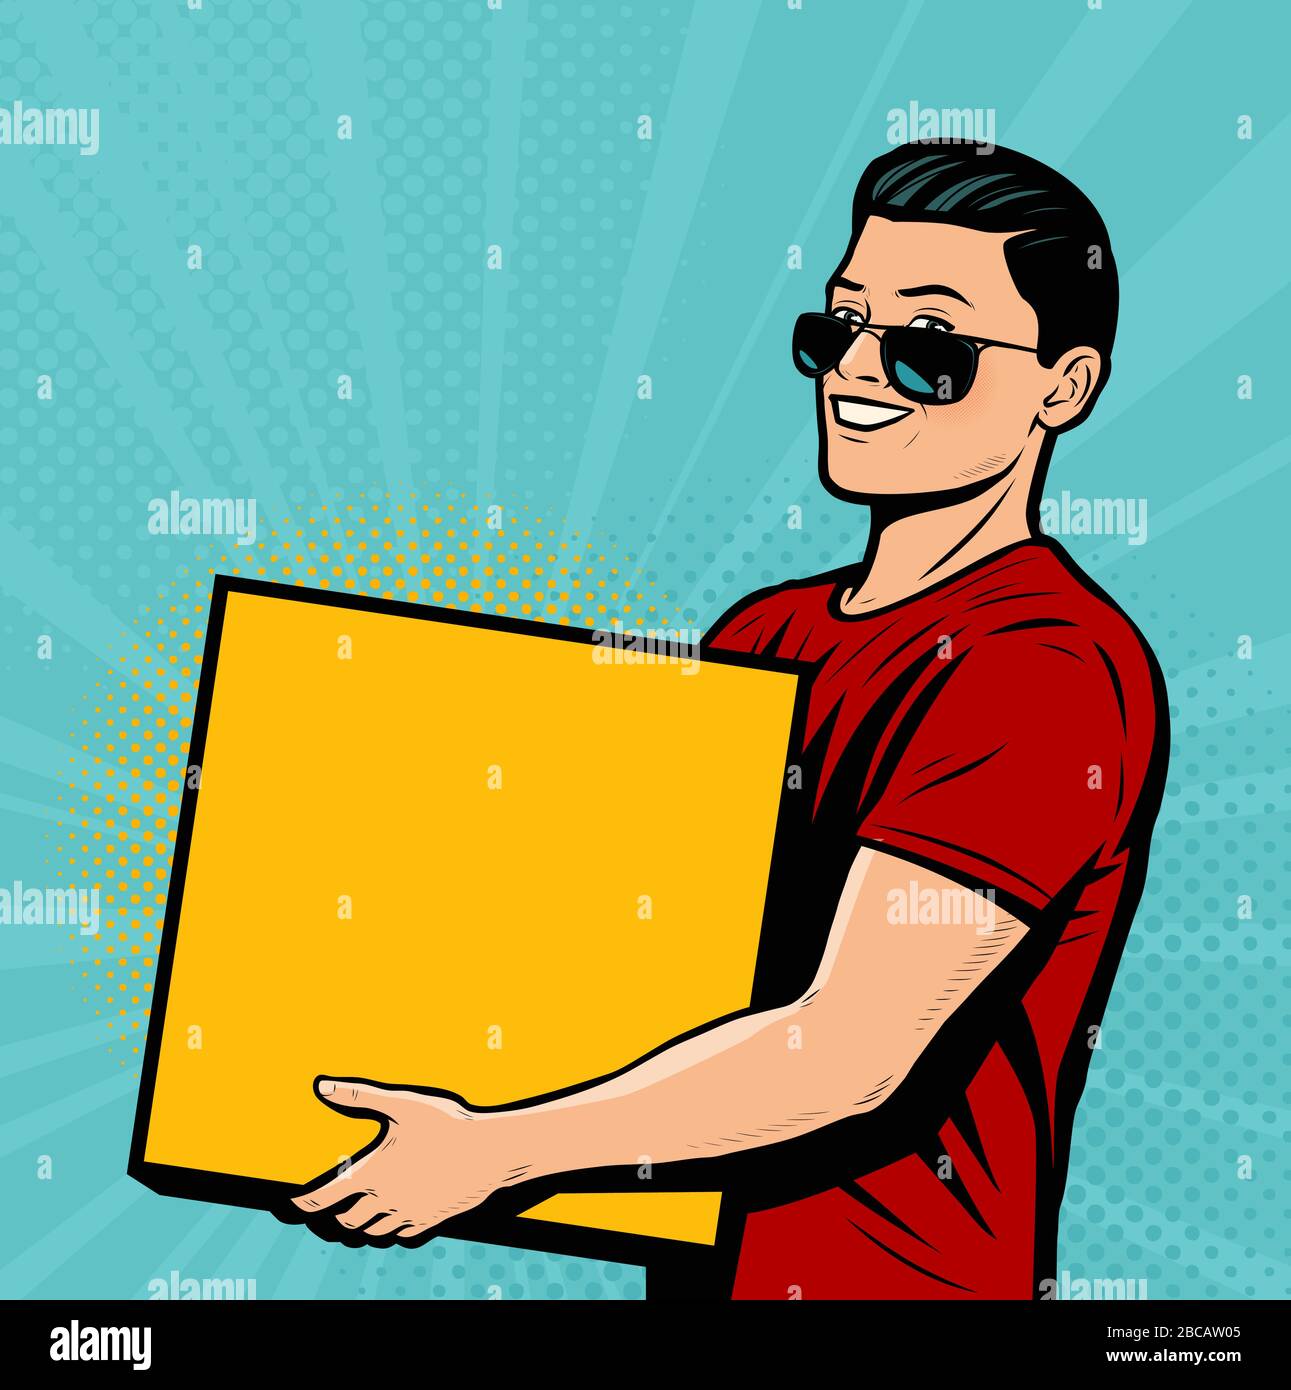 Man with box in his hands. Retro comic pop art vector illustration Stock Vector